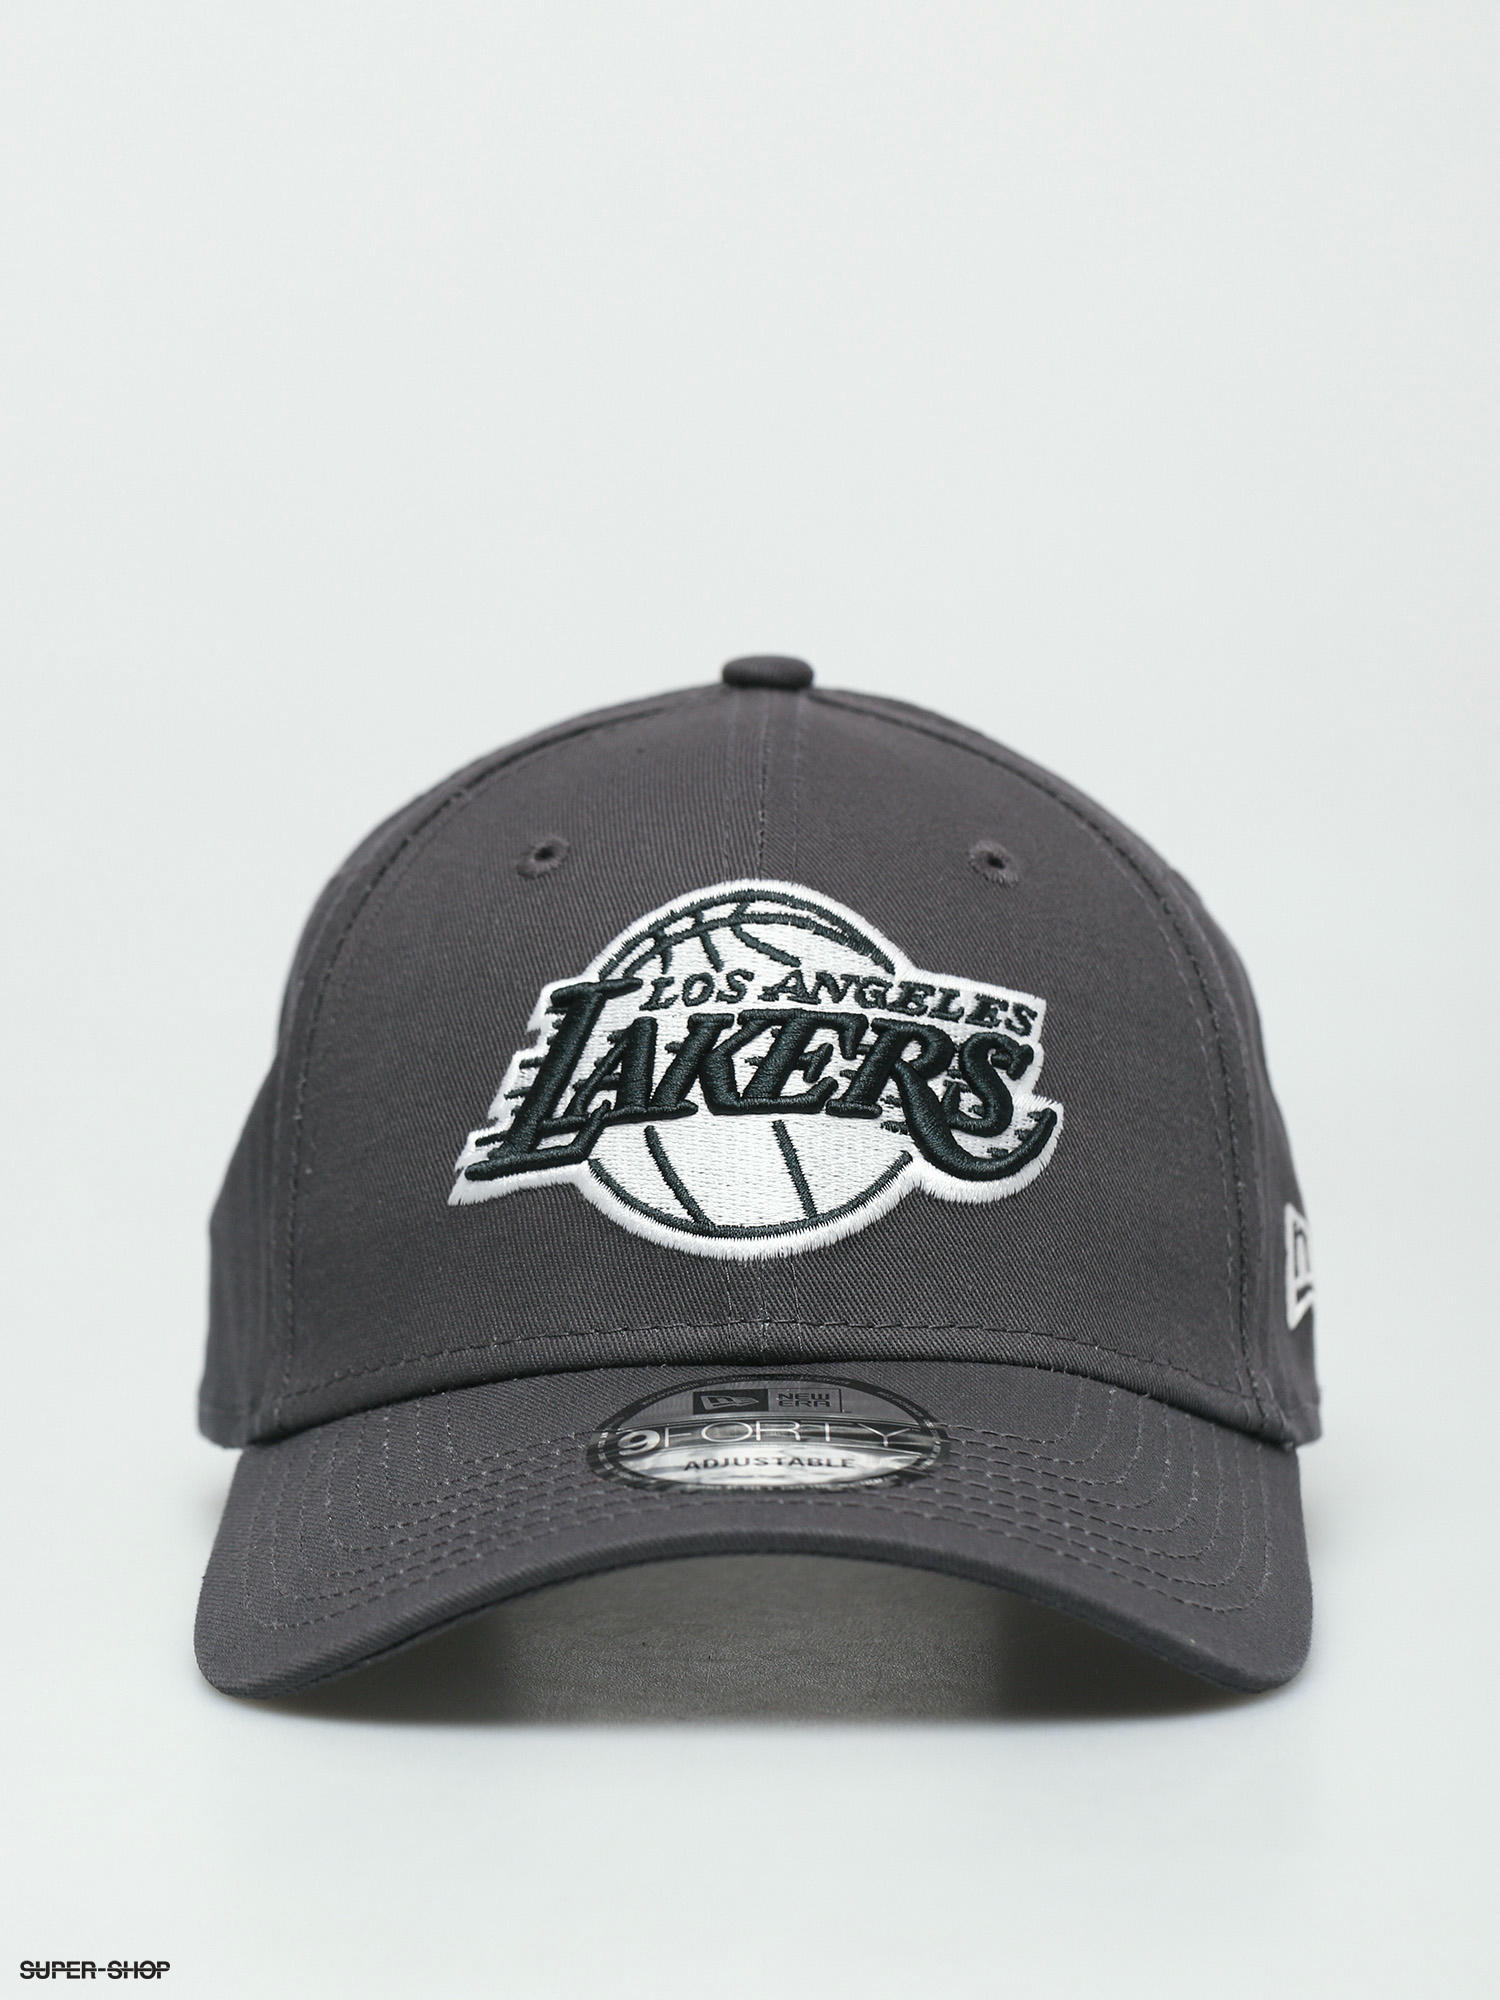 lakers hat grey